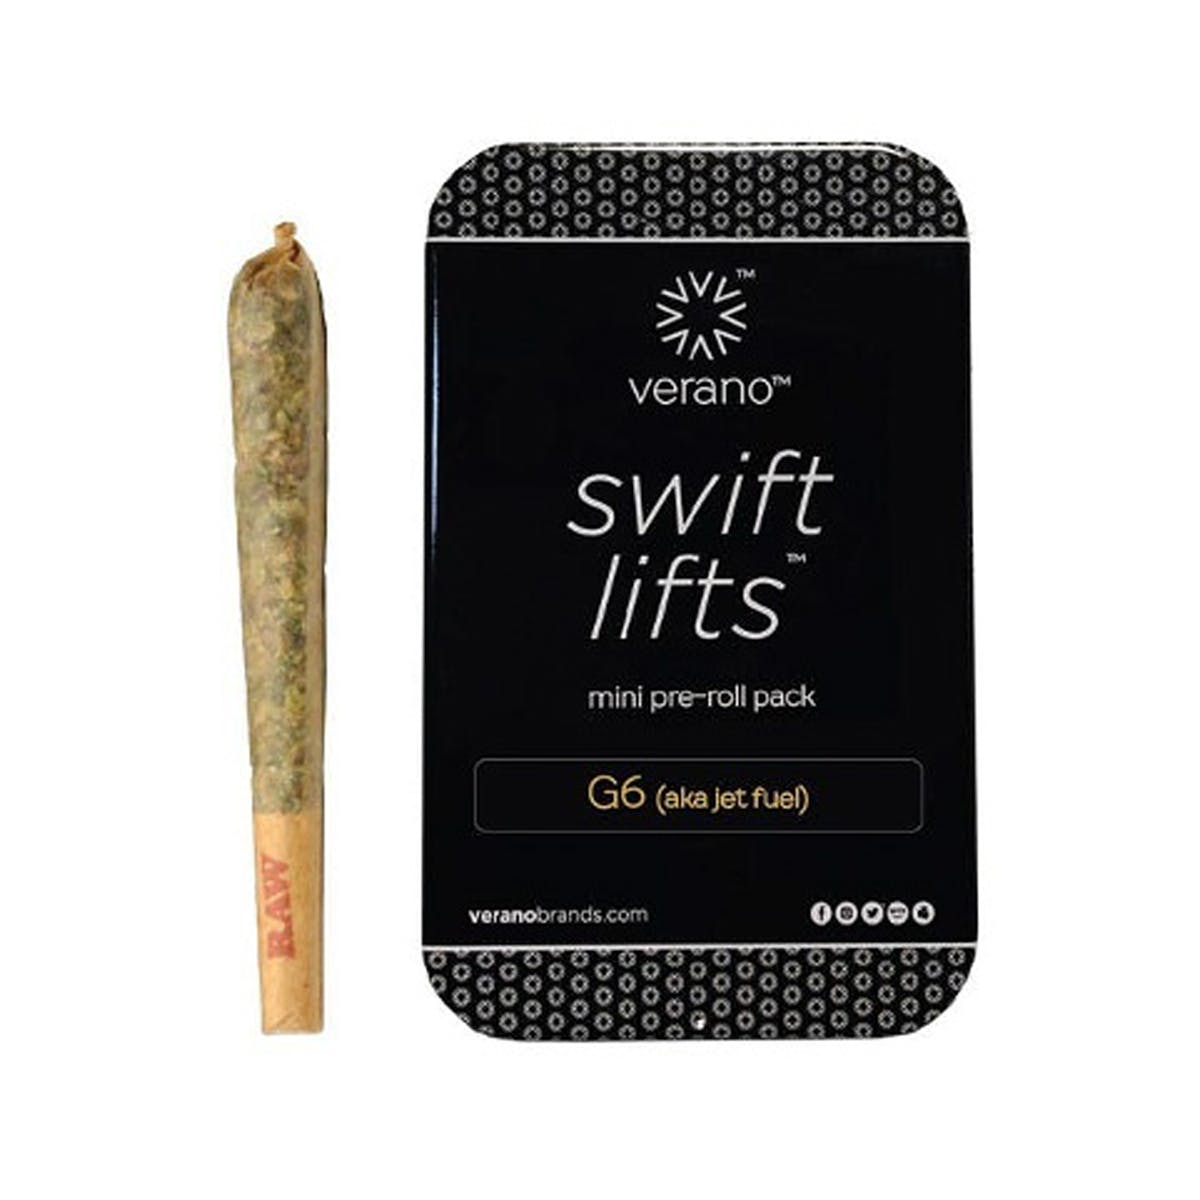 marijuana-dispensaries-remedy-columbia-in-columbia-swift-liftsa-c2-84c-mini-pre-roll-pack-g6-jet-fuel